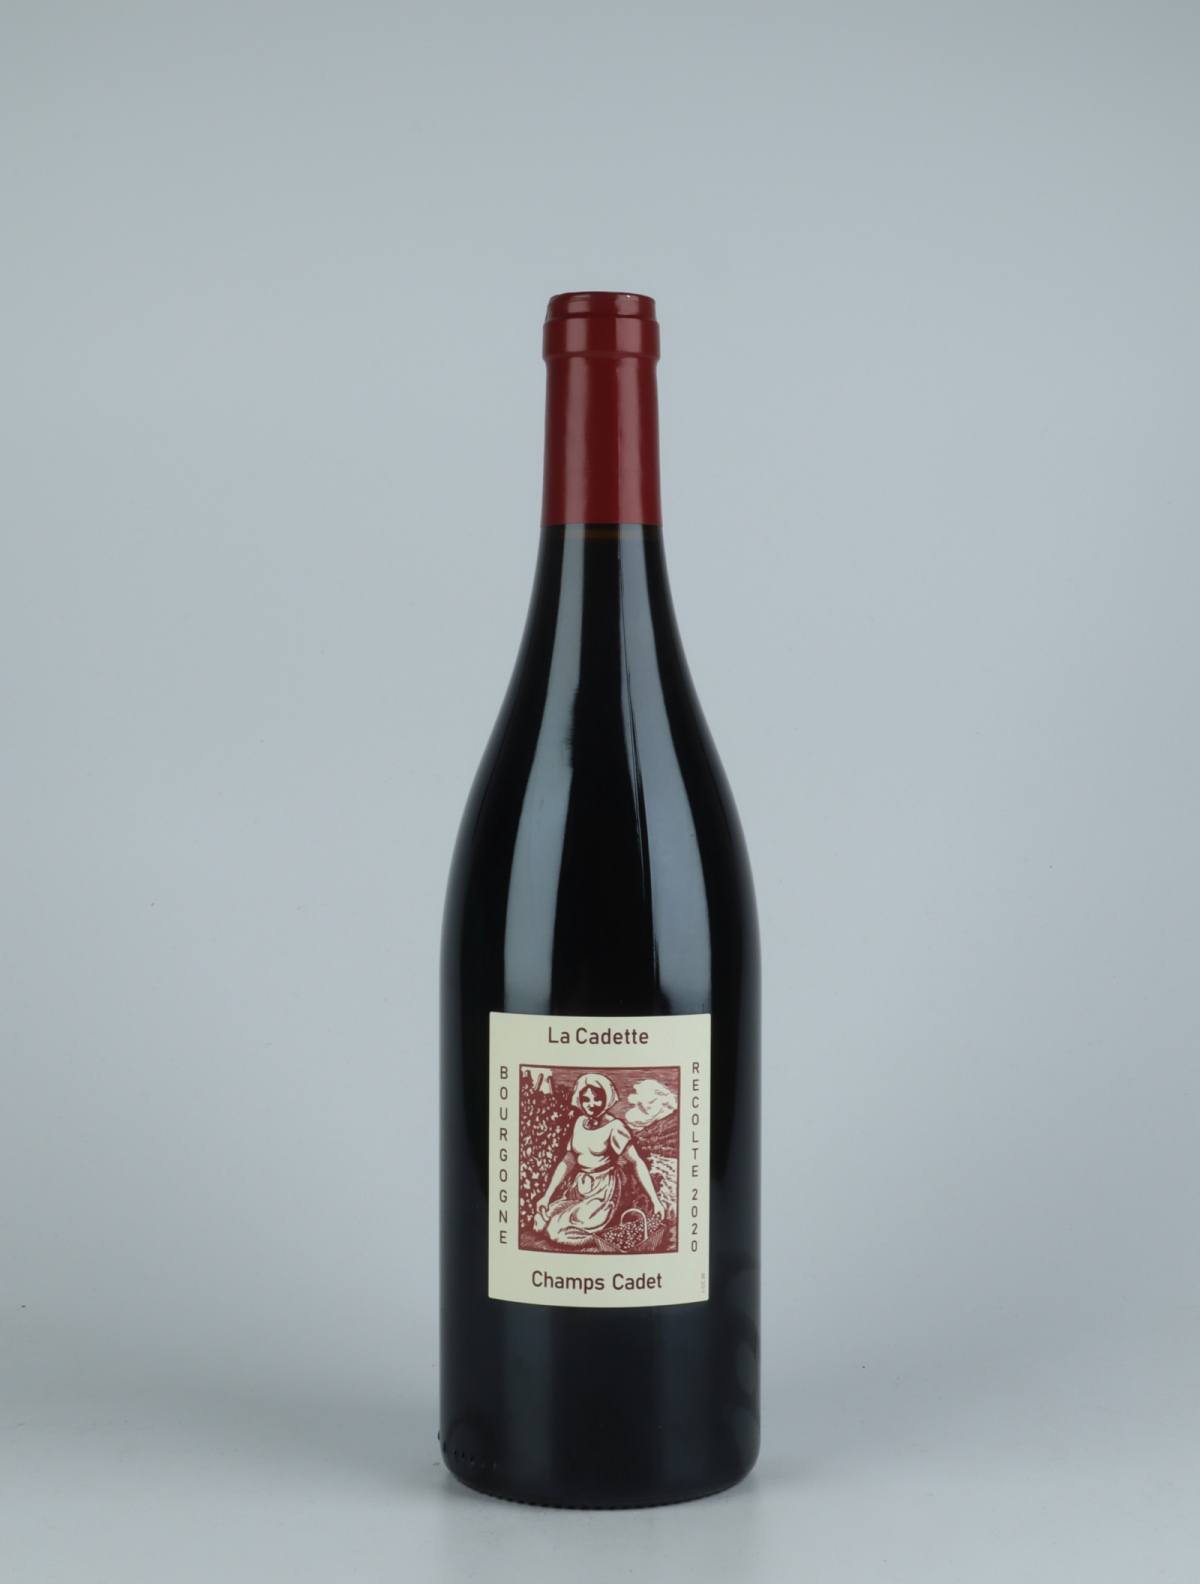 A bottle 2020 Bourgogne Rouge - Champs Cadet Red wine from Domaine de la Cadette, Burgundy in France